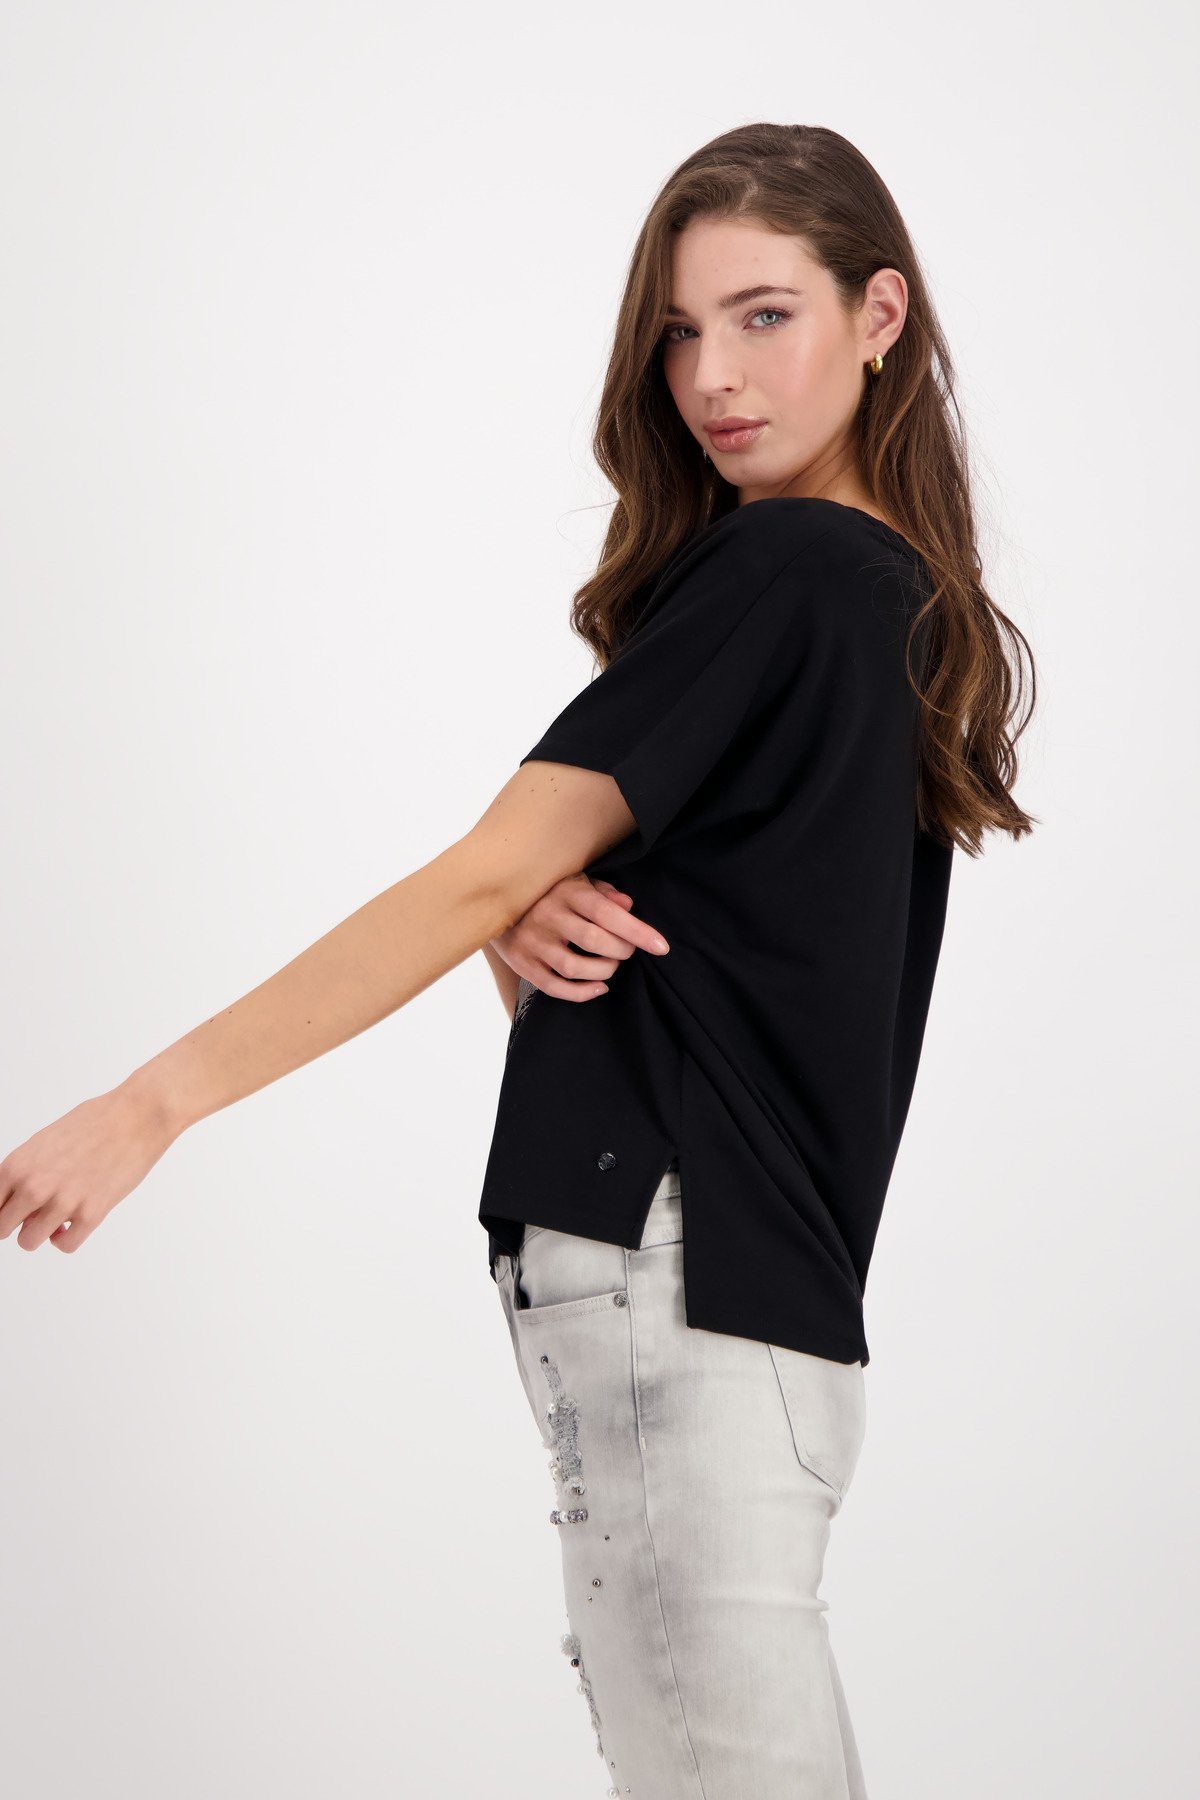 Monari T-Shirt Muster schwarz mit Shirt Paisley T 999